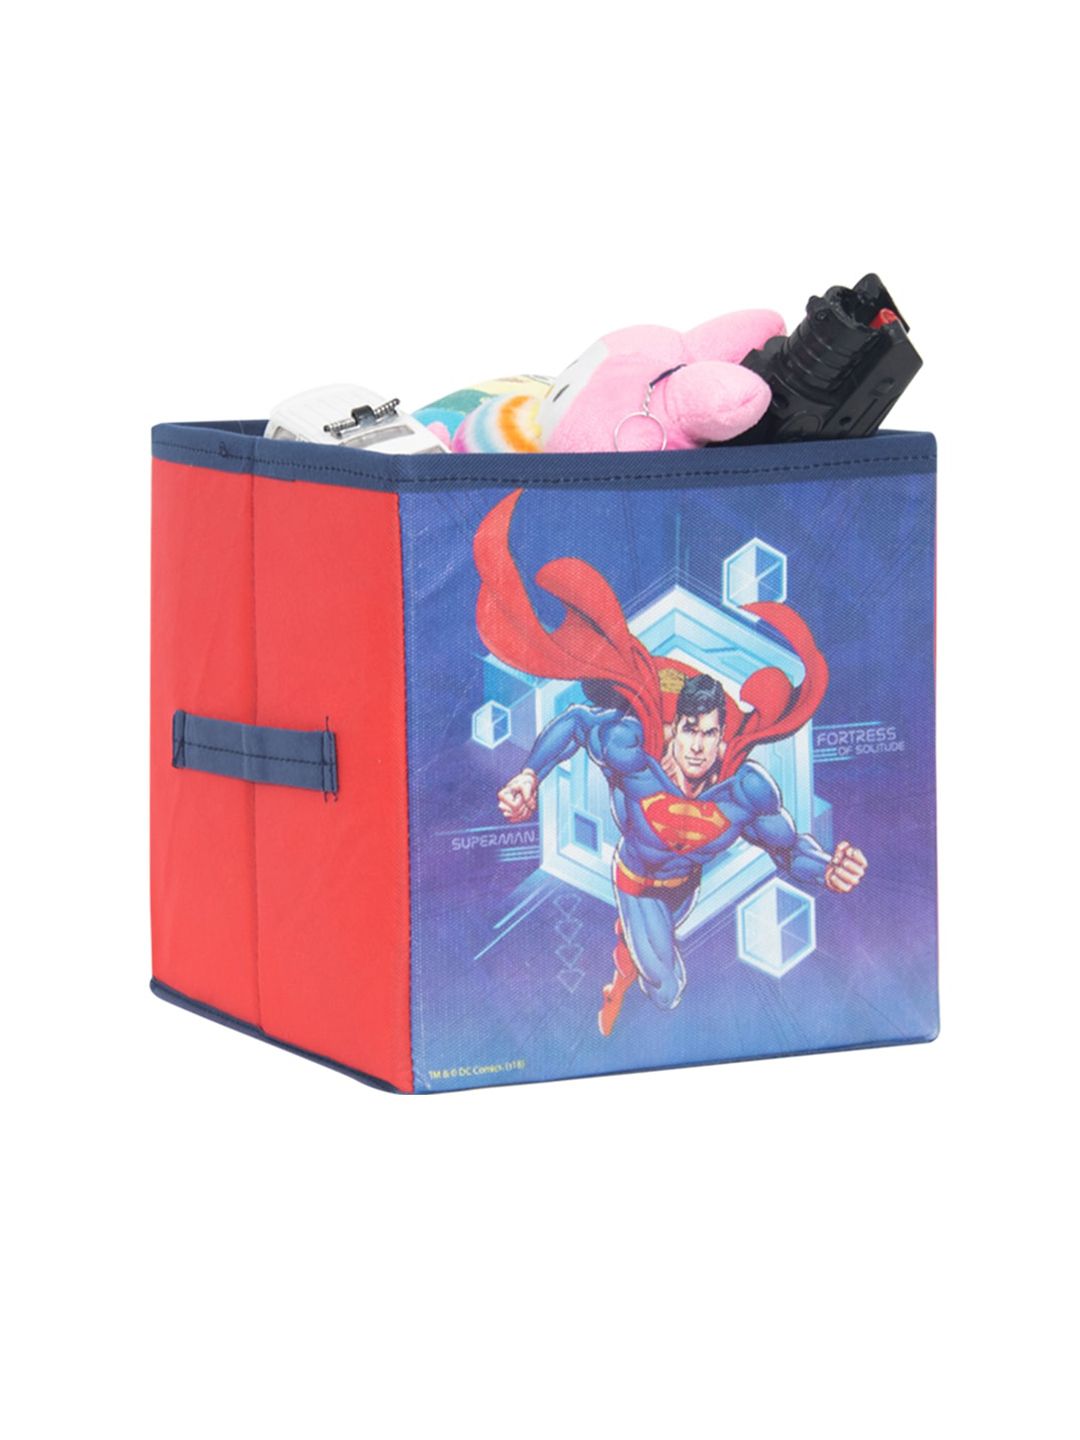 prettykrafts Red & Blue Superman Printed Foldable Kids Toys Organizer Storage Box Price in India